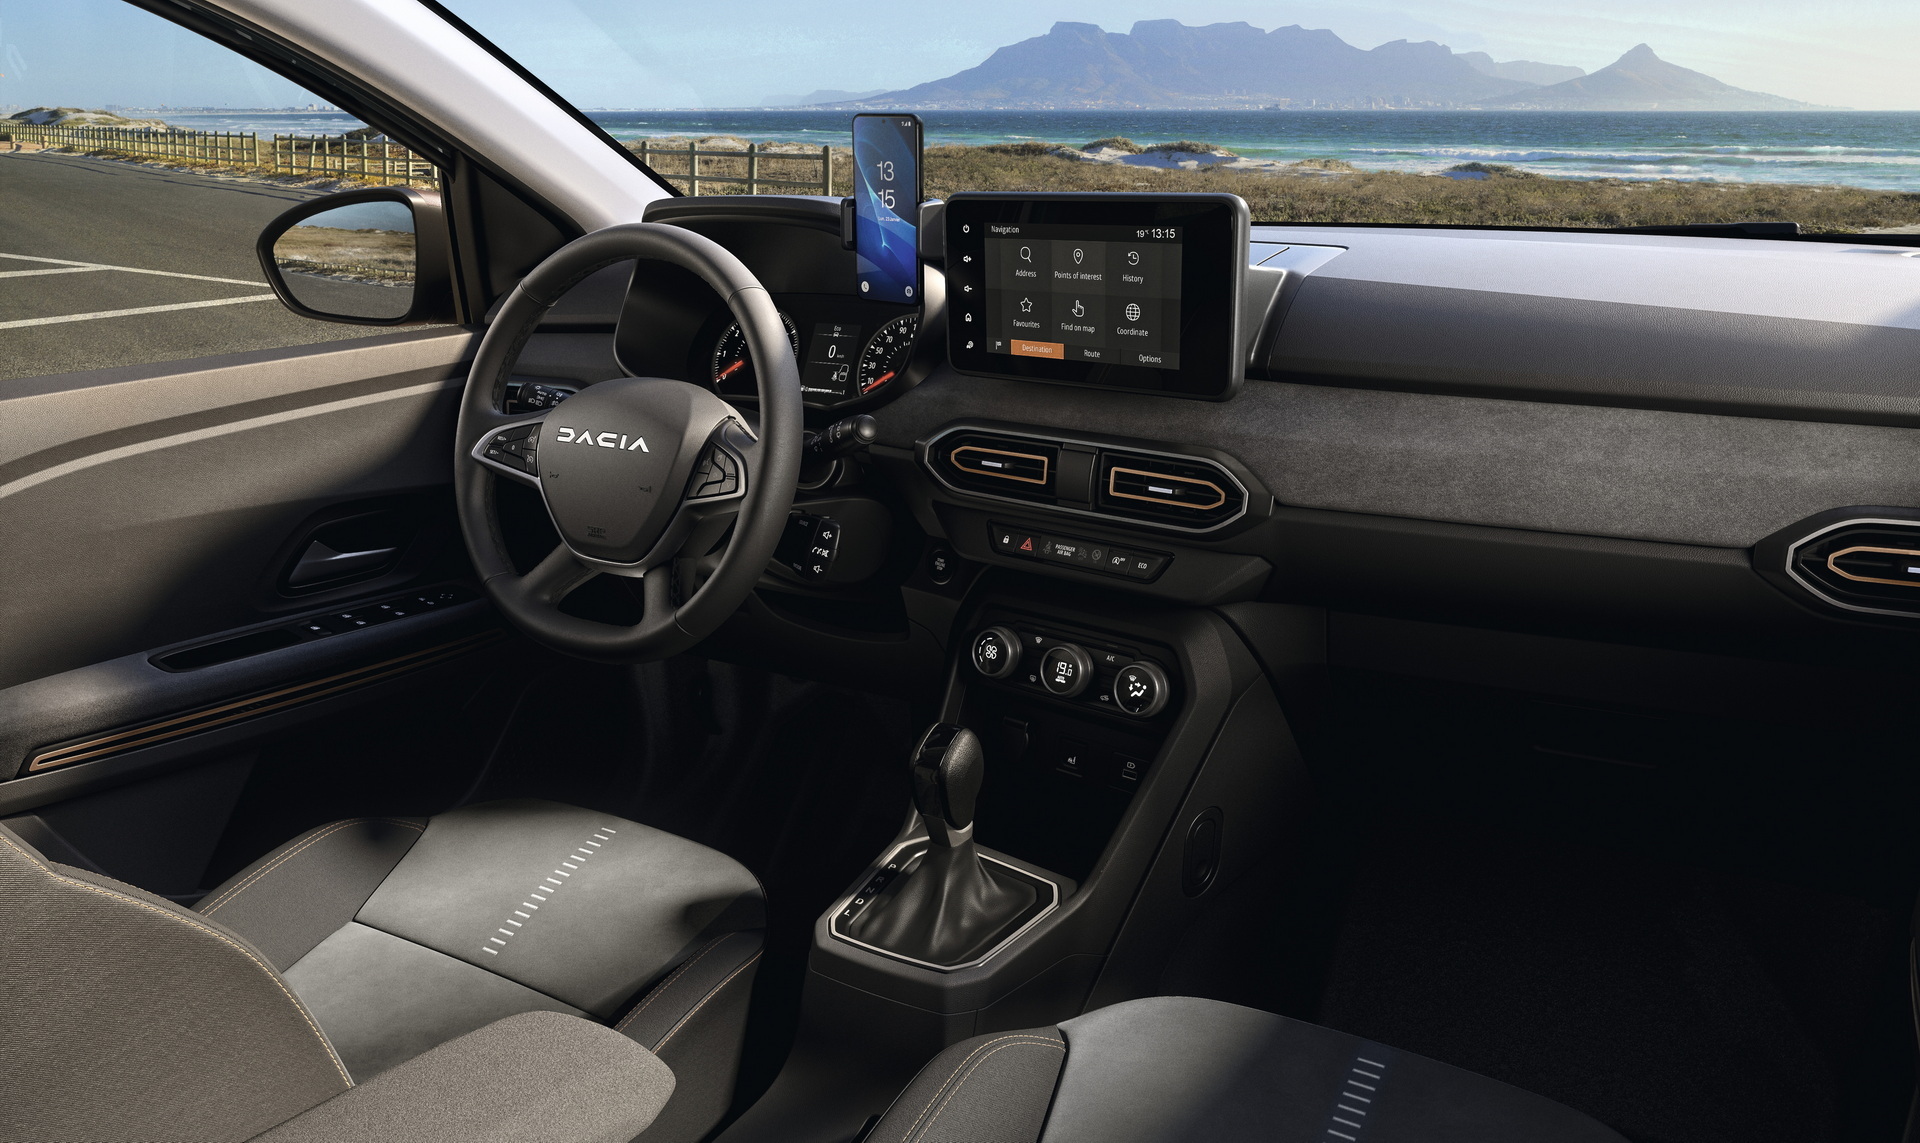 NEW 2023 Dacia Sandero Stepway Extreme - Visual REVIEW, Driving